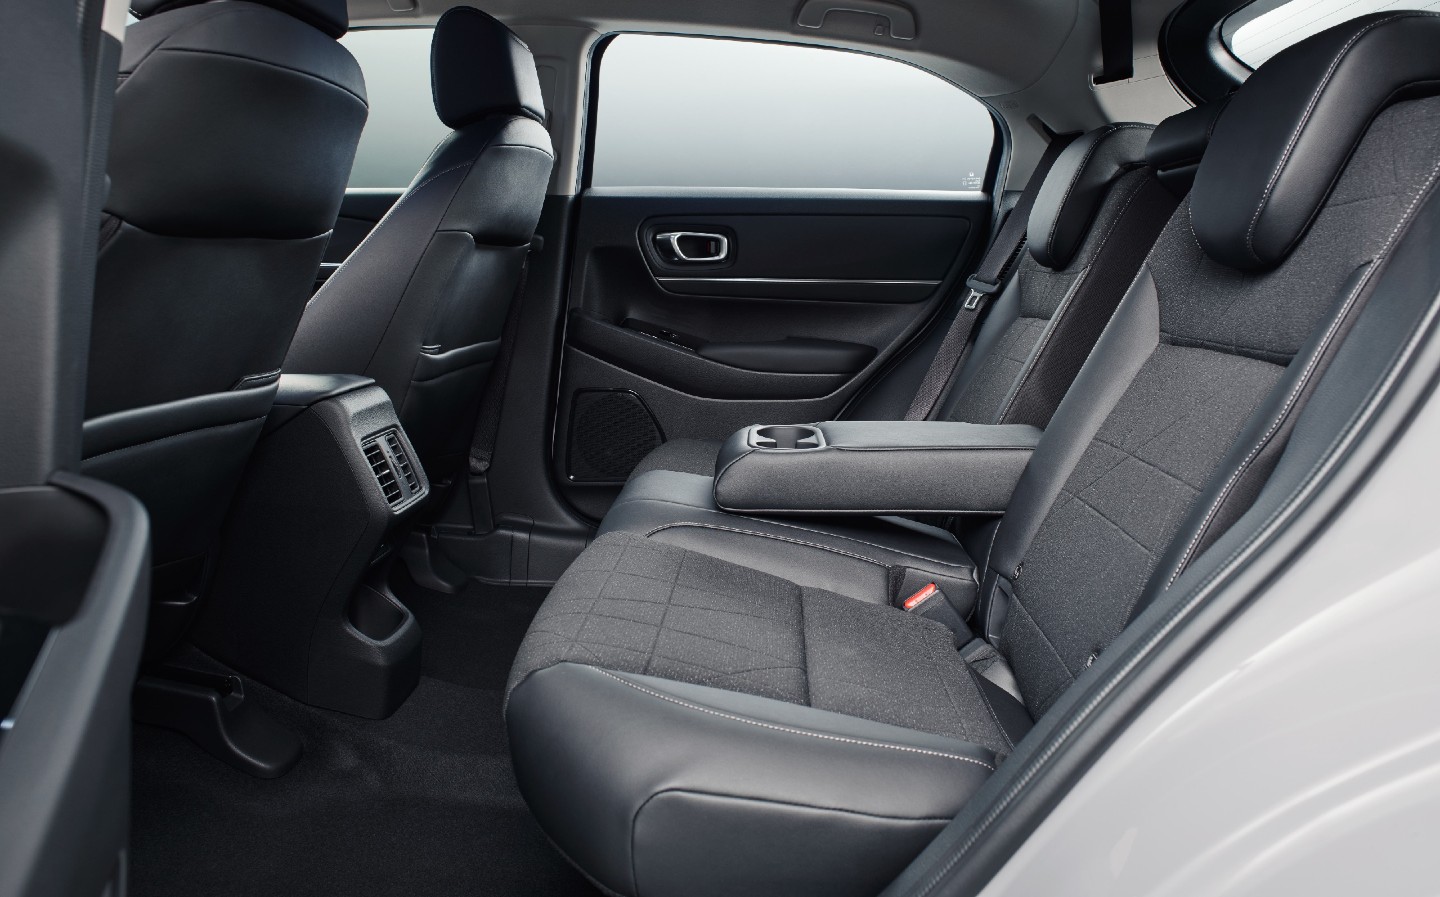 All-new 2021 Honda HR-V revealed - rear seat interior space